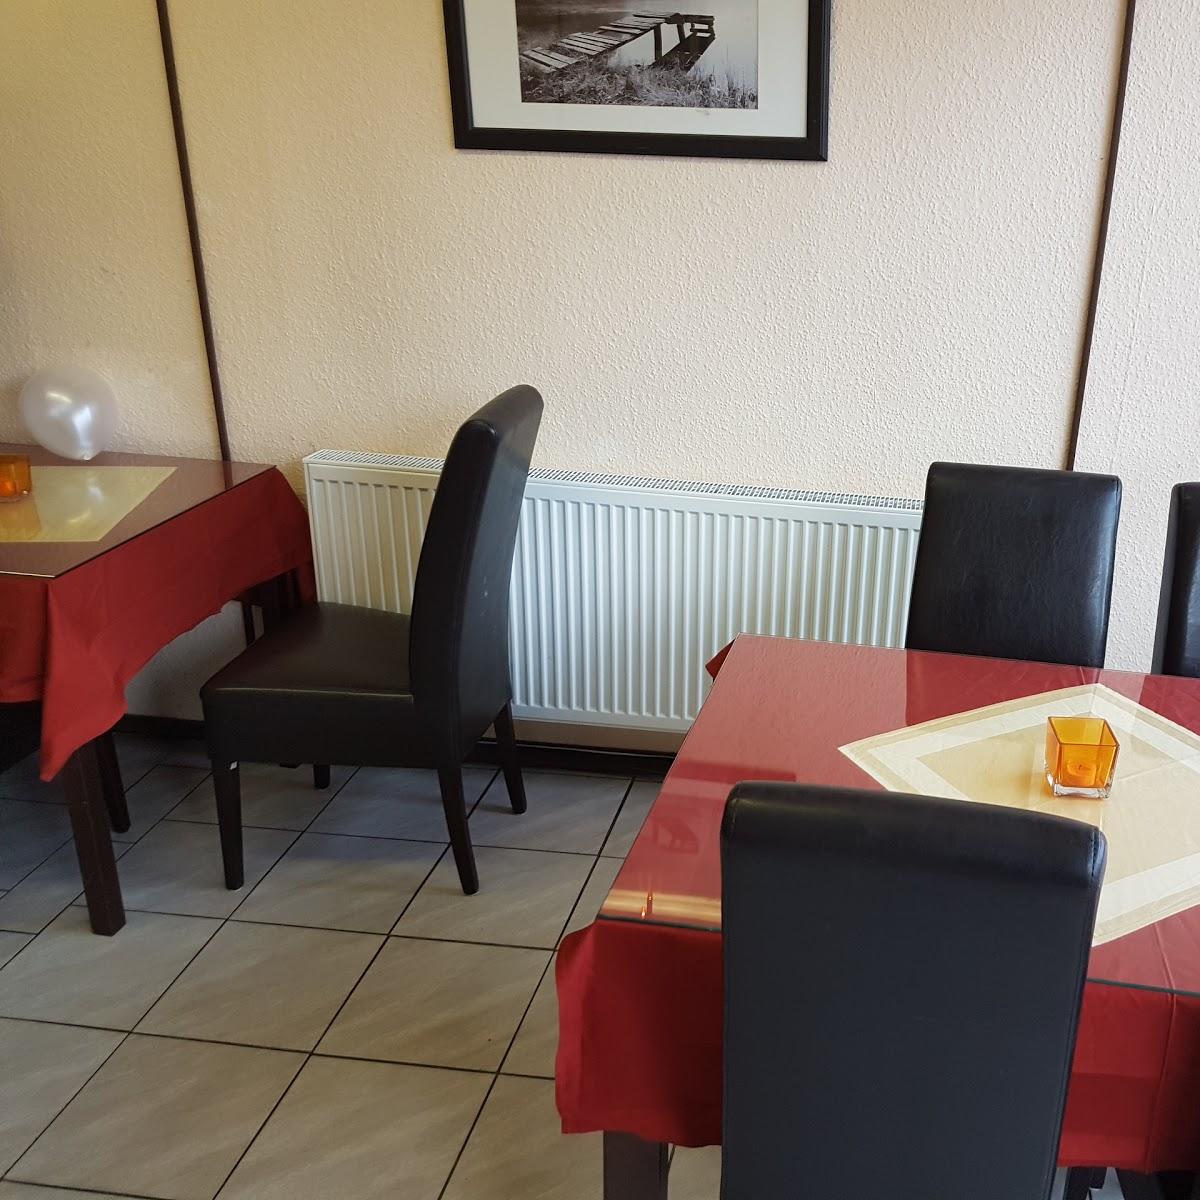 Restaurant "sai pizzeria" in Hamm